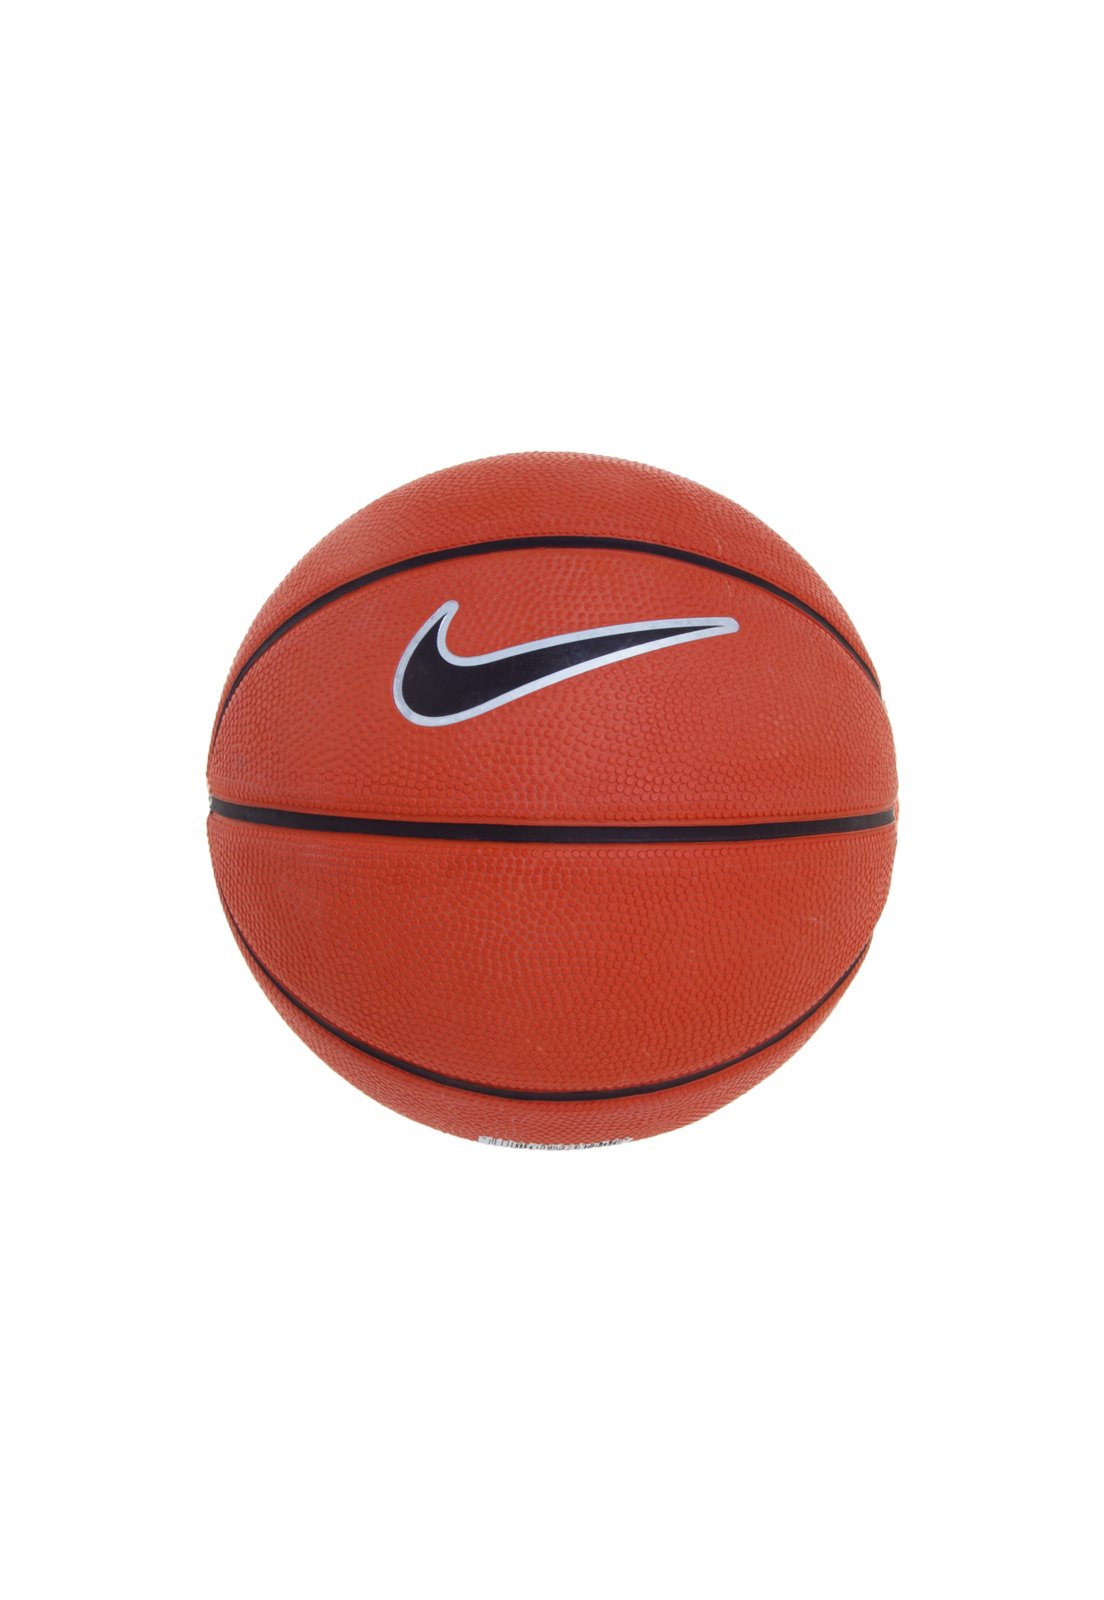 Mini Bola de Basquete Nike - Laranja - Bola Pequena Basquetebol